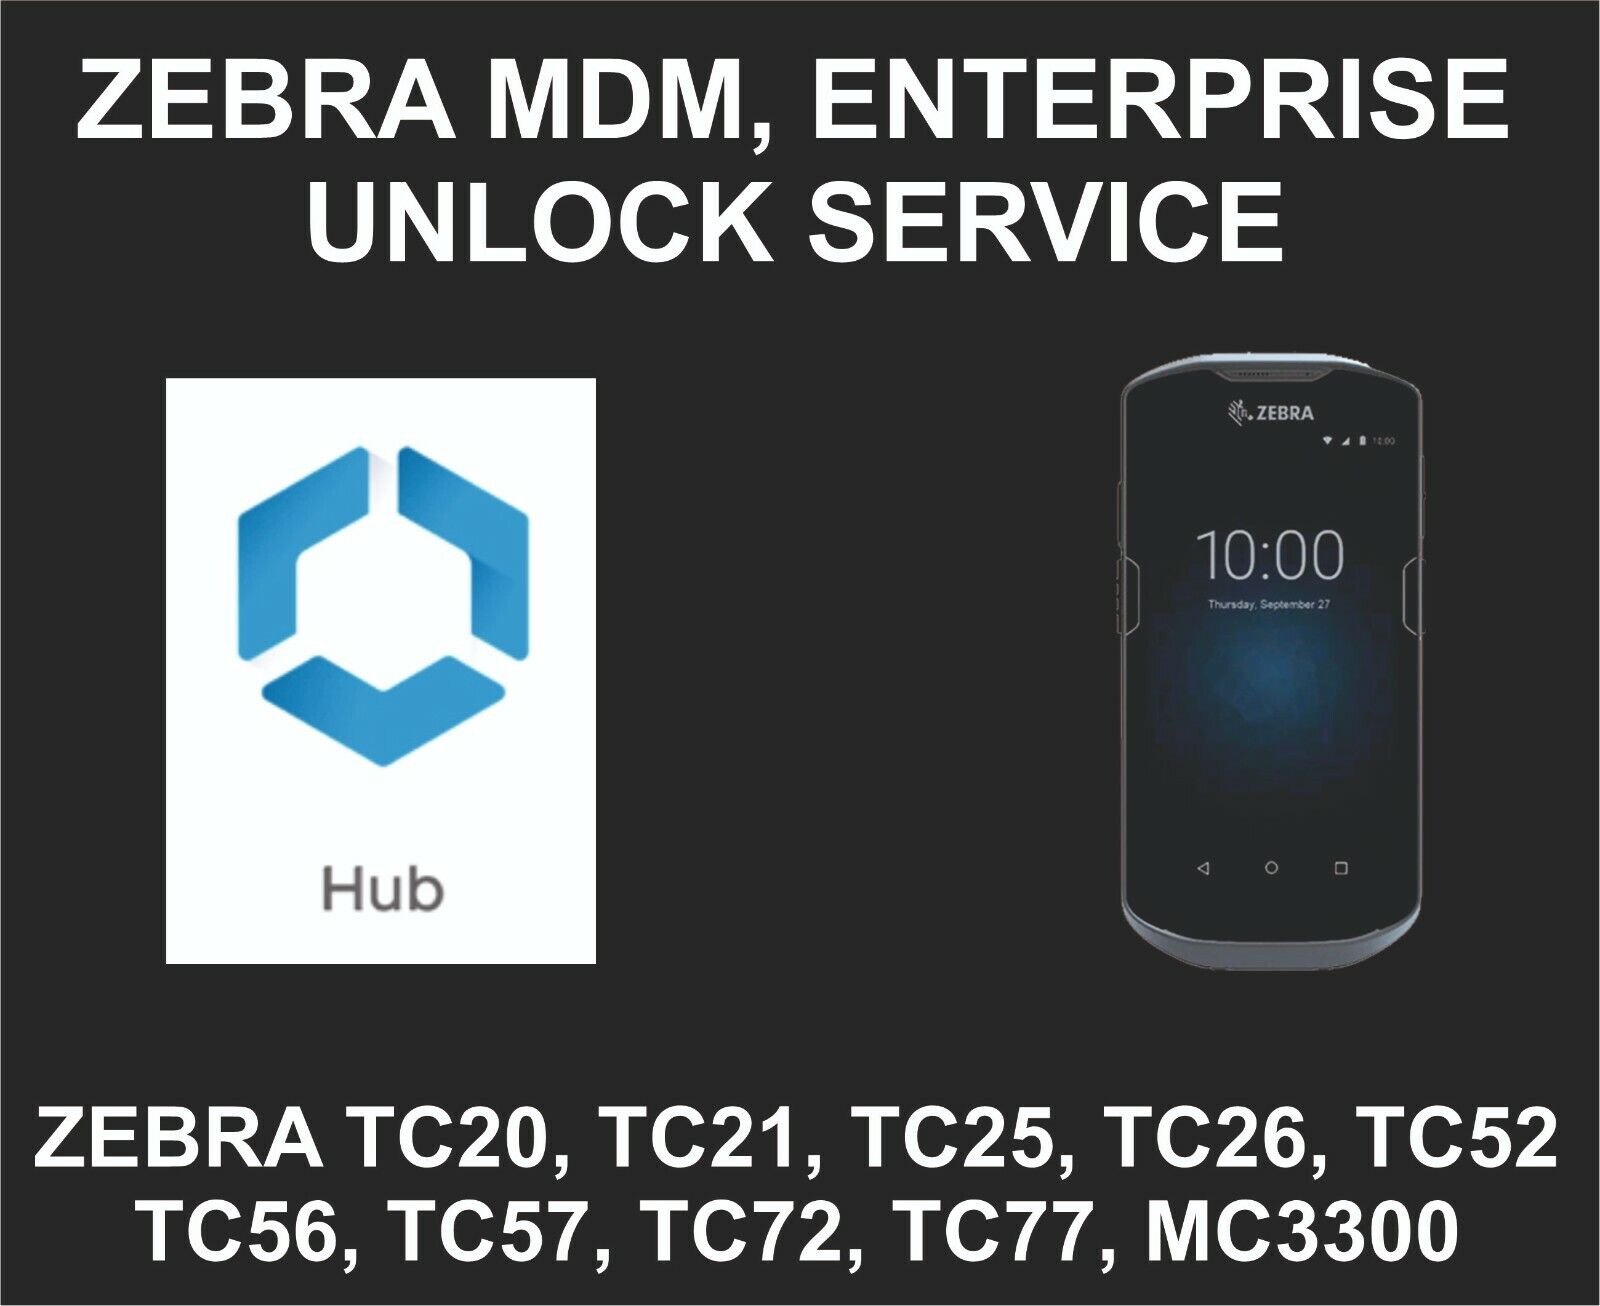 Zebra Mdm Unlock Service, Tc20, Tc21, Tc25, Tc26, Tc51, Tc52, Tc56, Tc57, Tc70